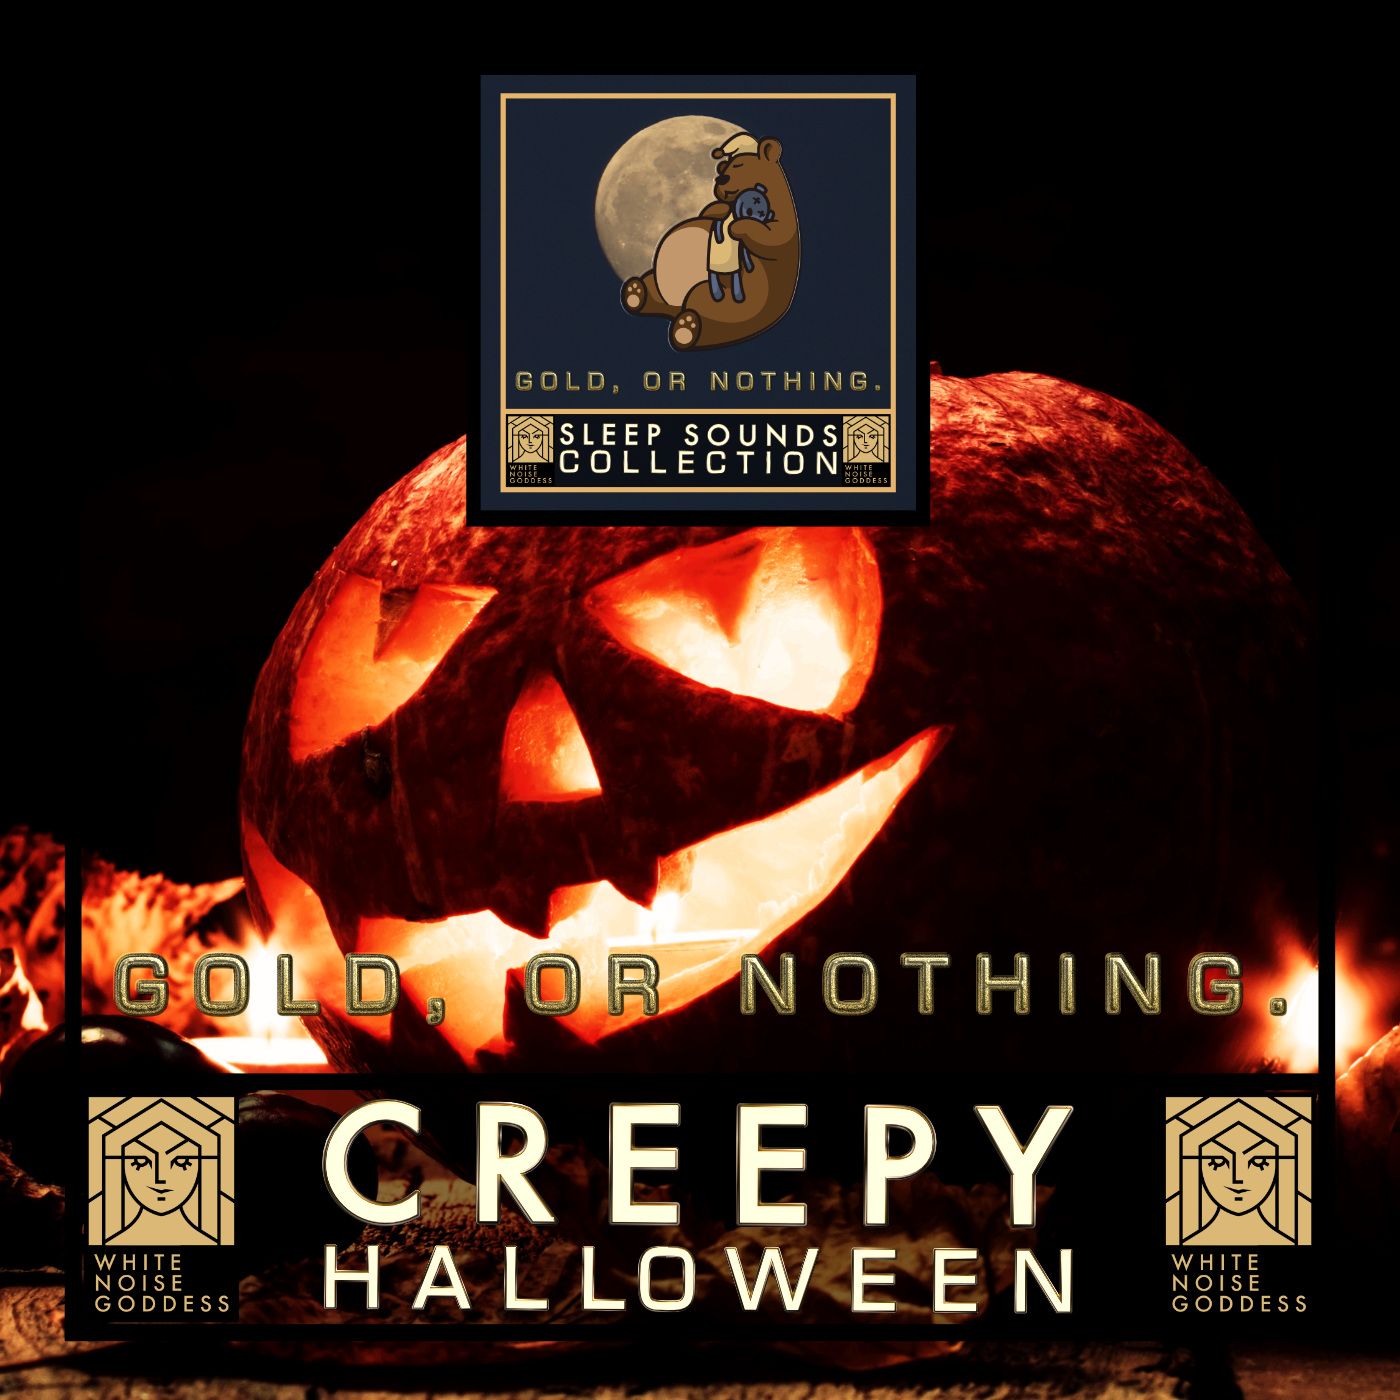 Creepy Halloween Night | White Noise | ASMR | Deep Sleep